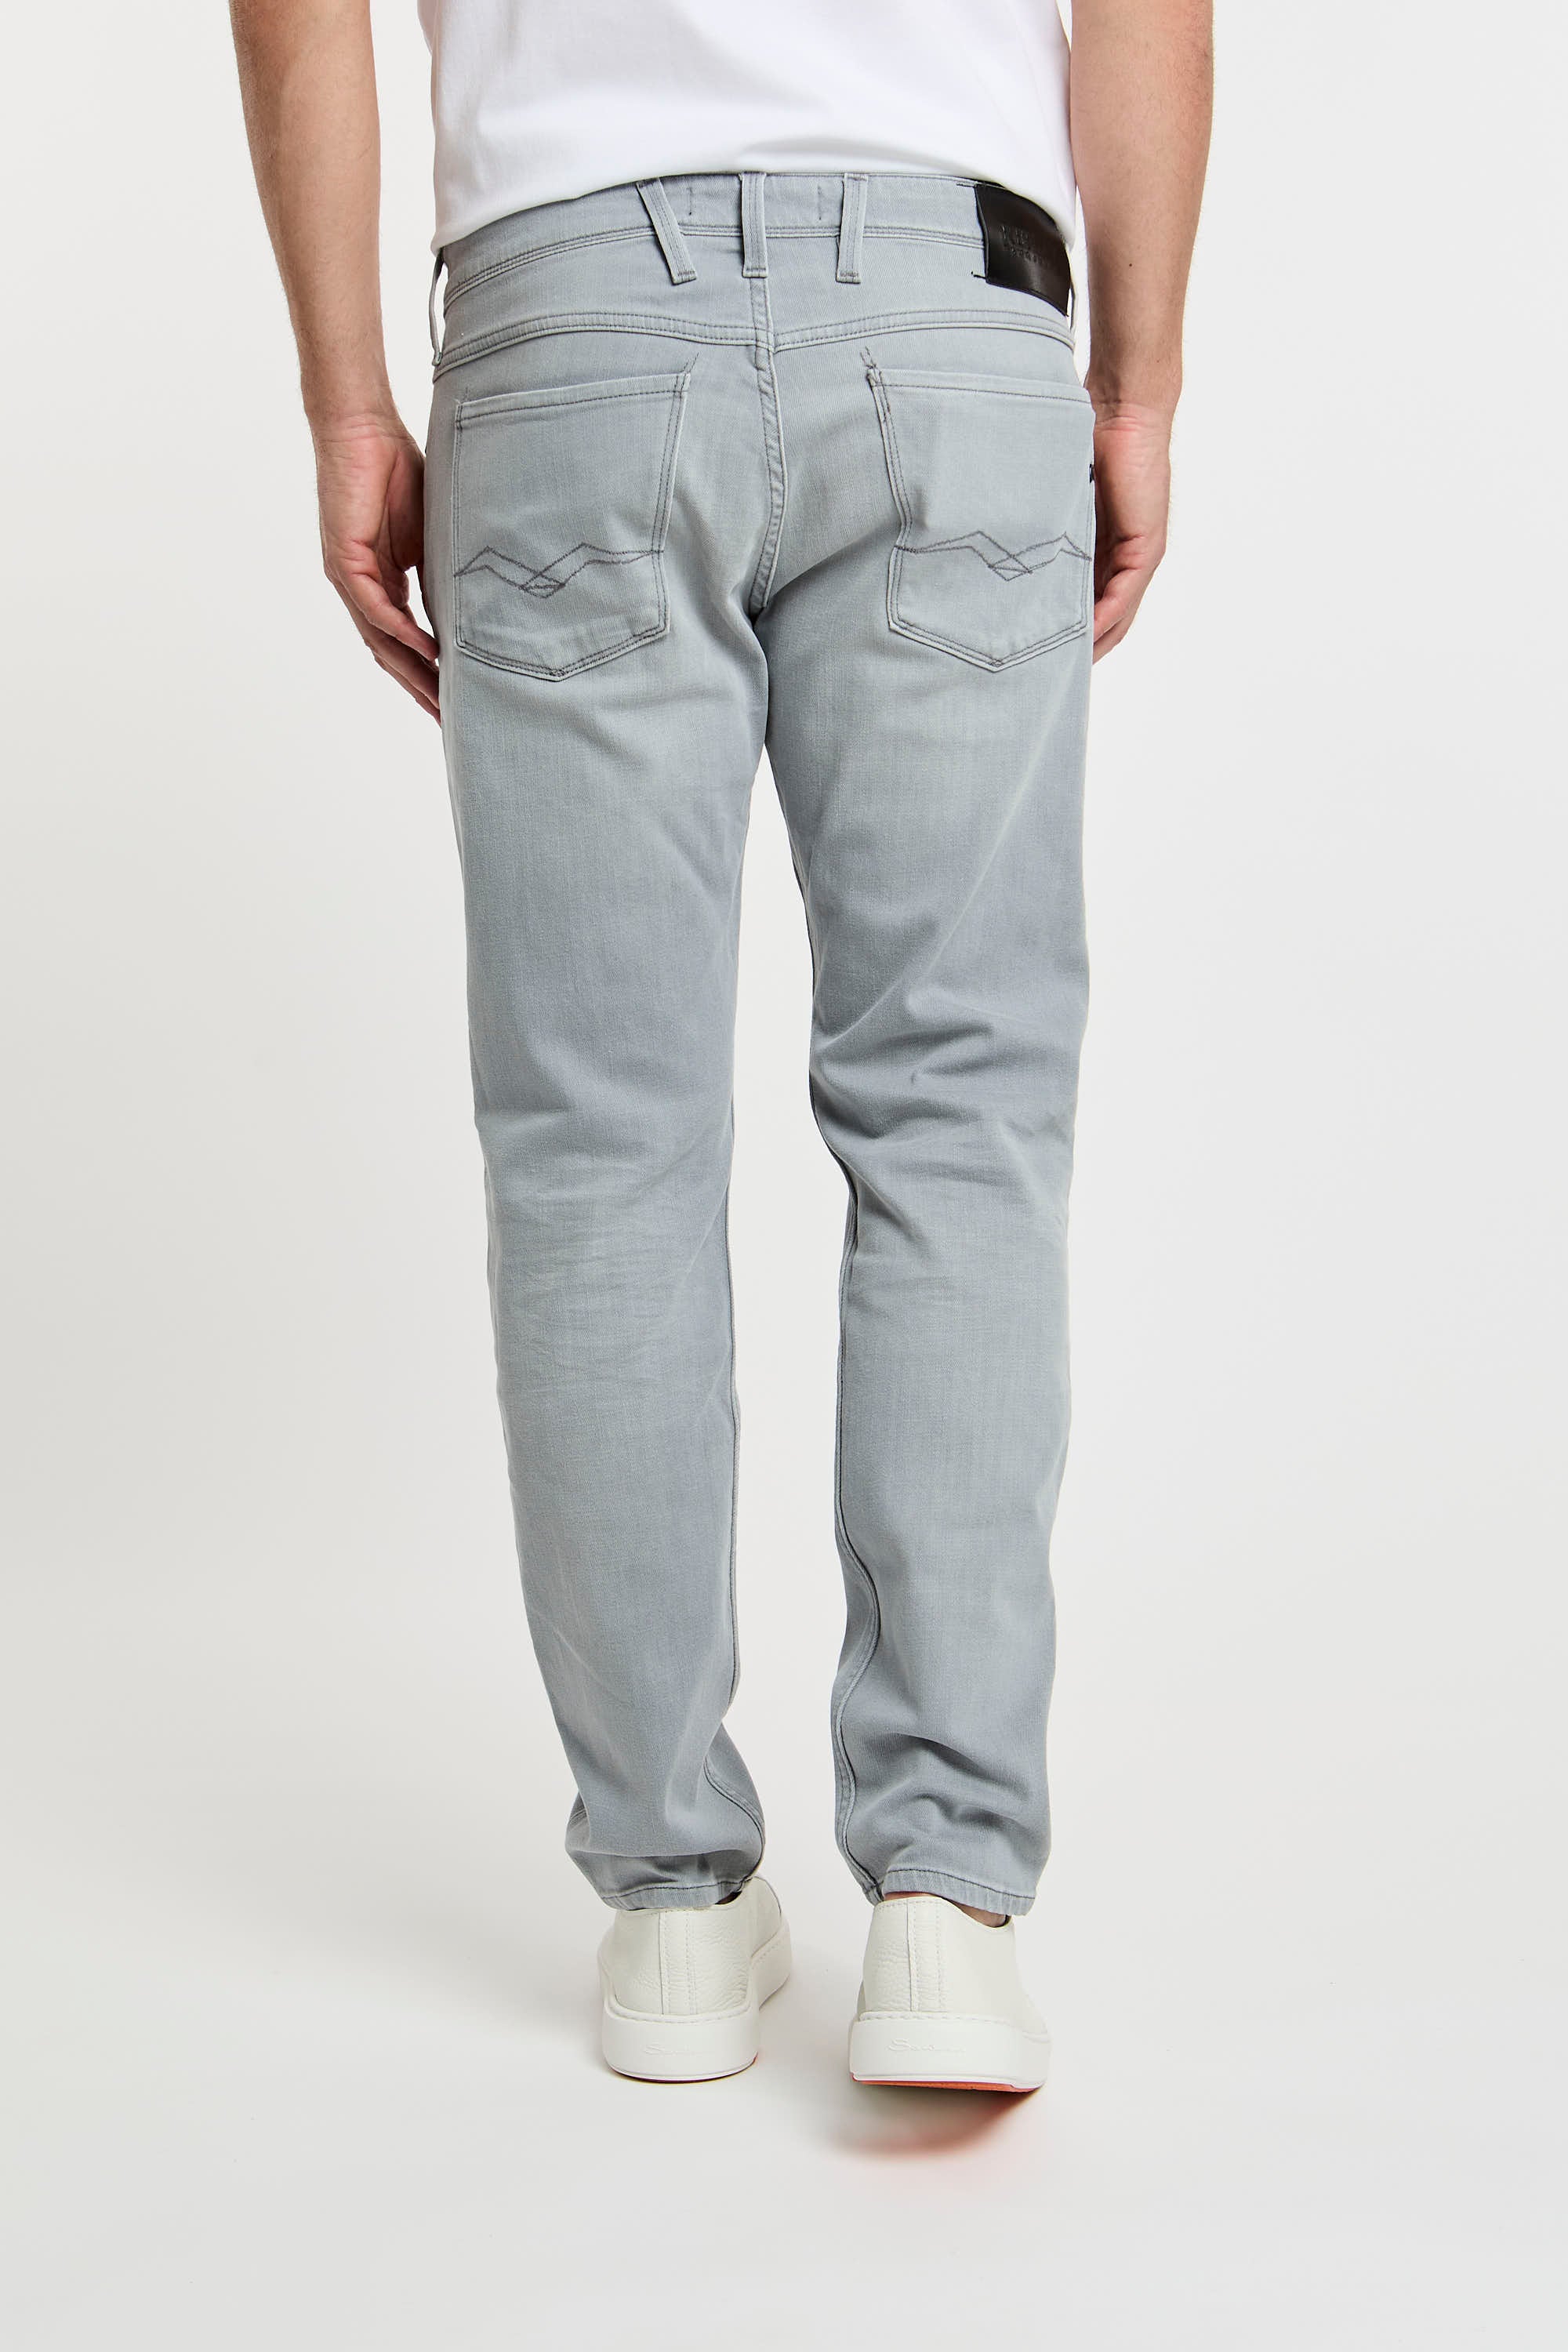 Replay Jeans Slim Fit Anbass aus Baumwolle/Elasthan in Hellgrau-4